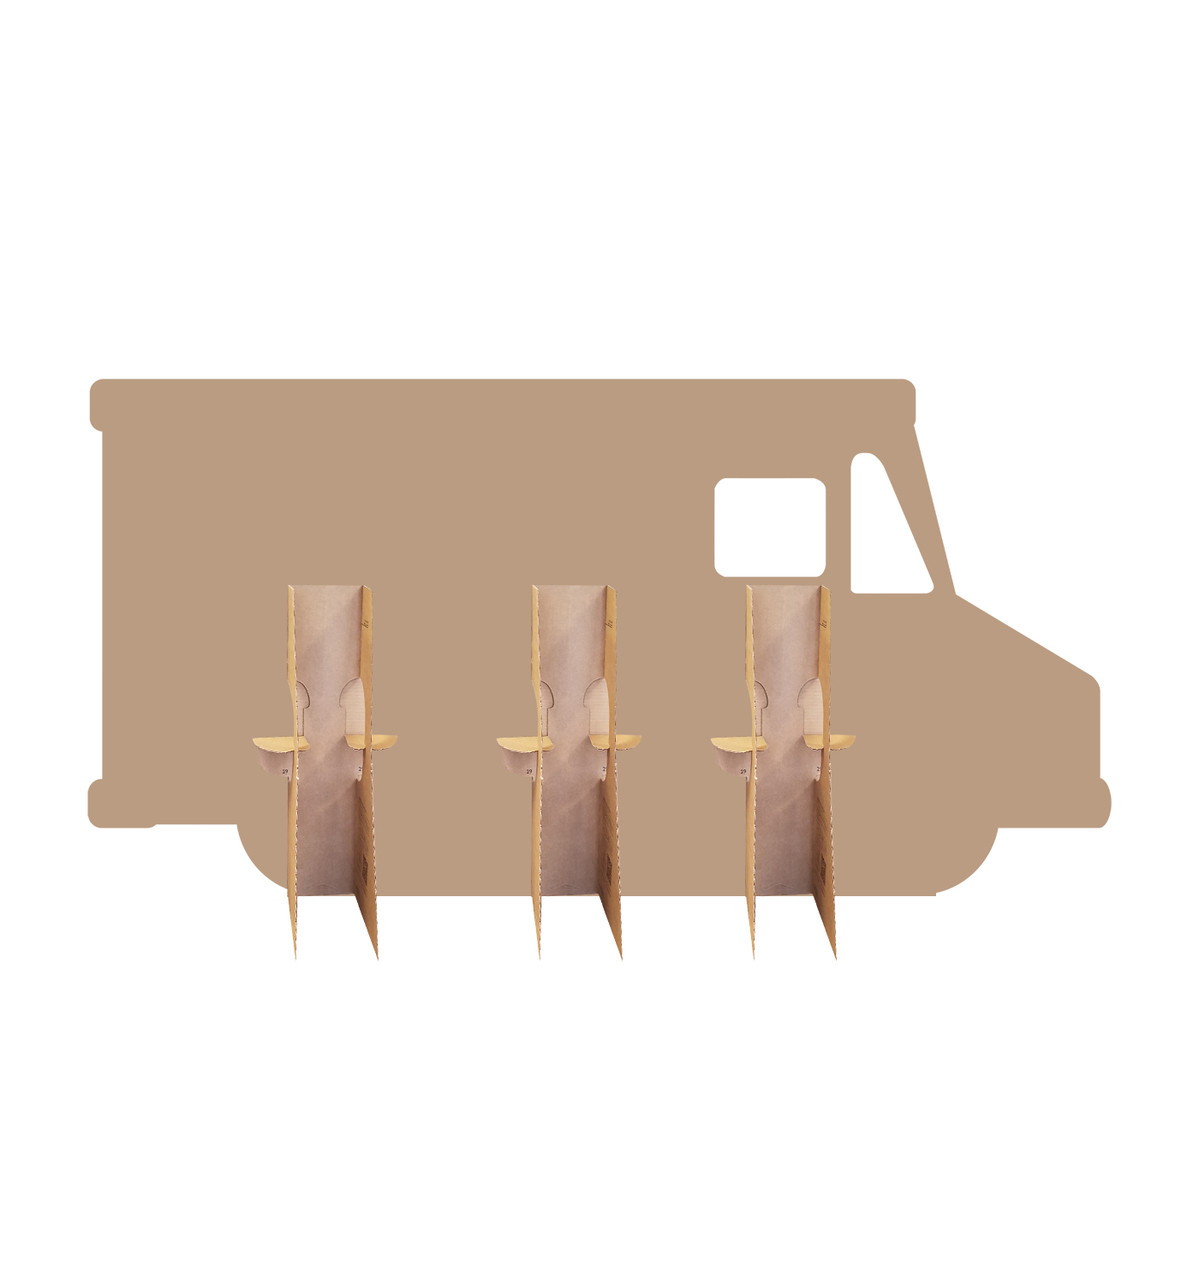 Life-size Taco Truck Standin Cardboard Standup